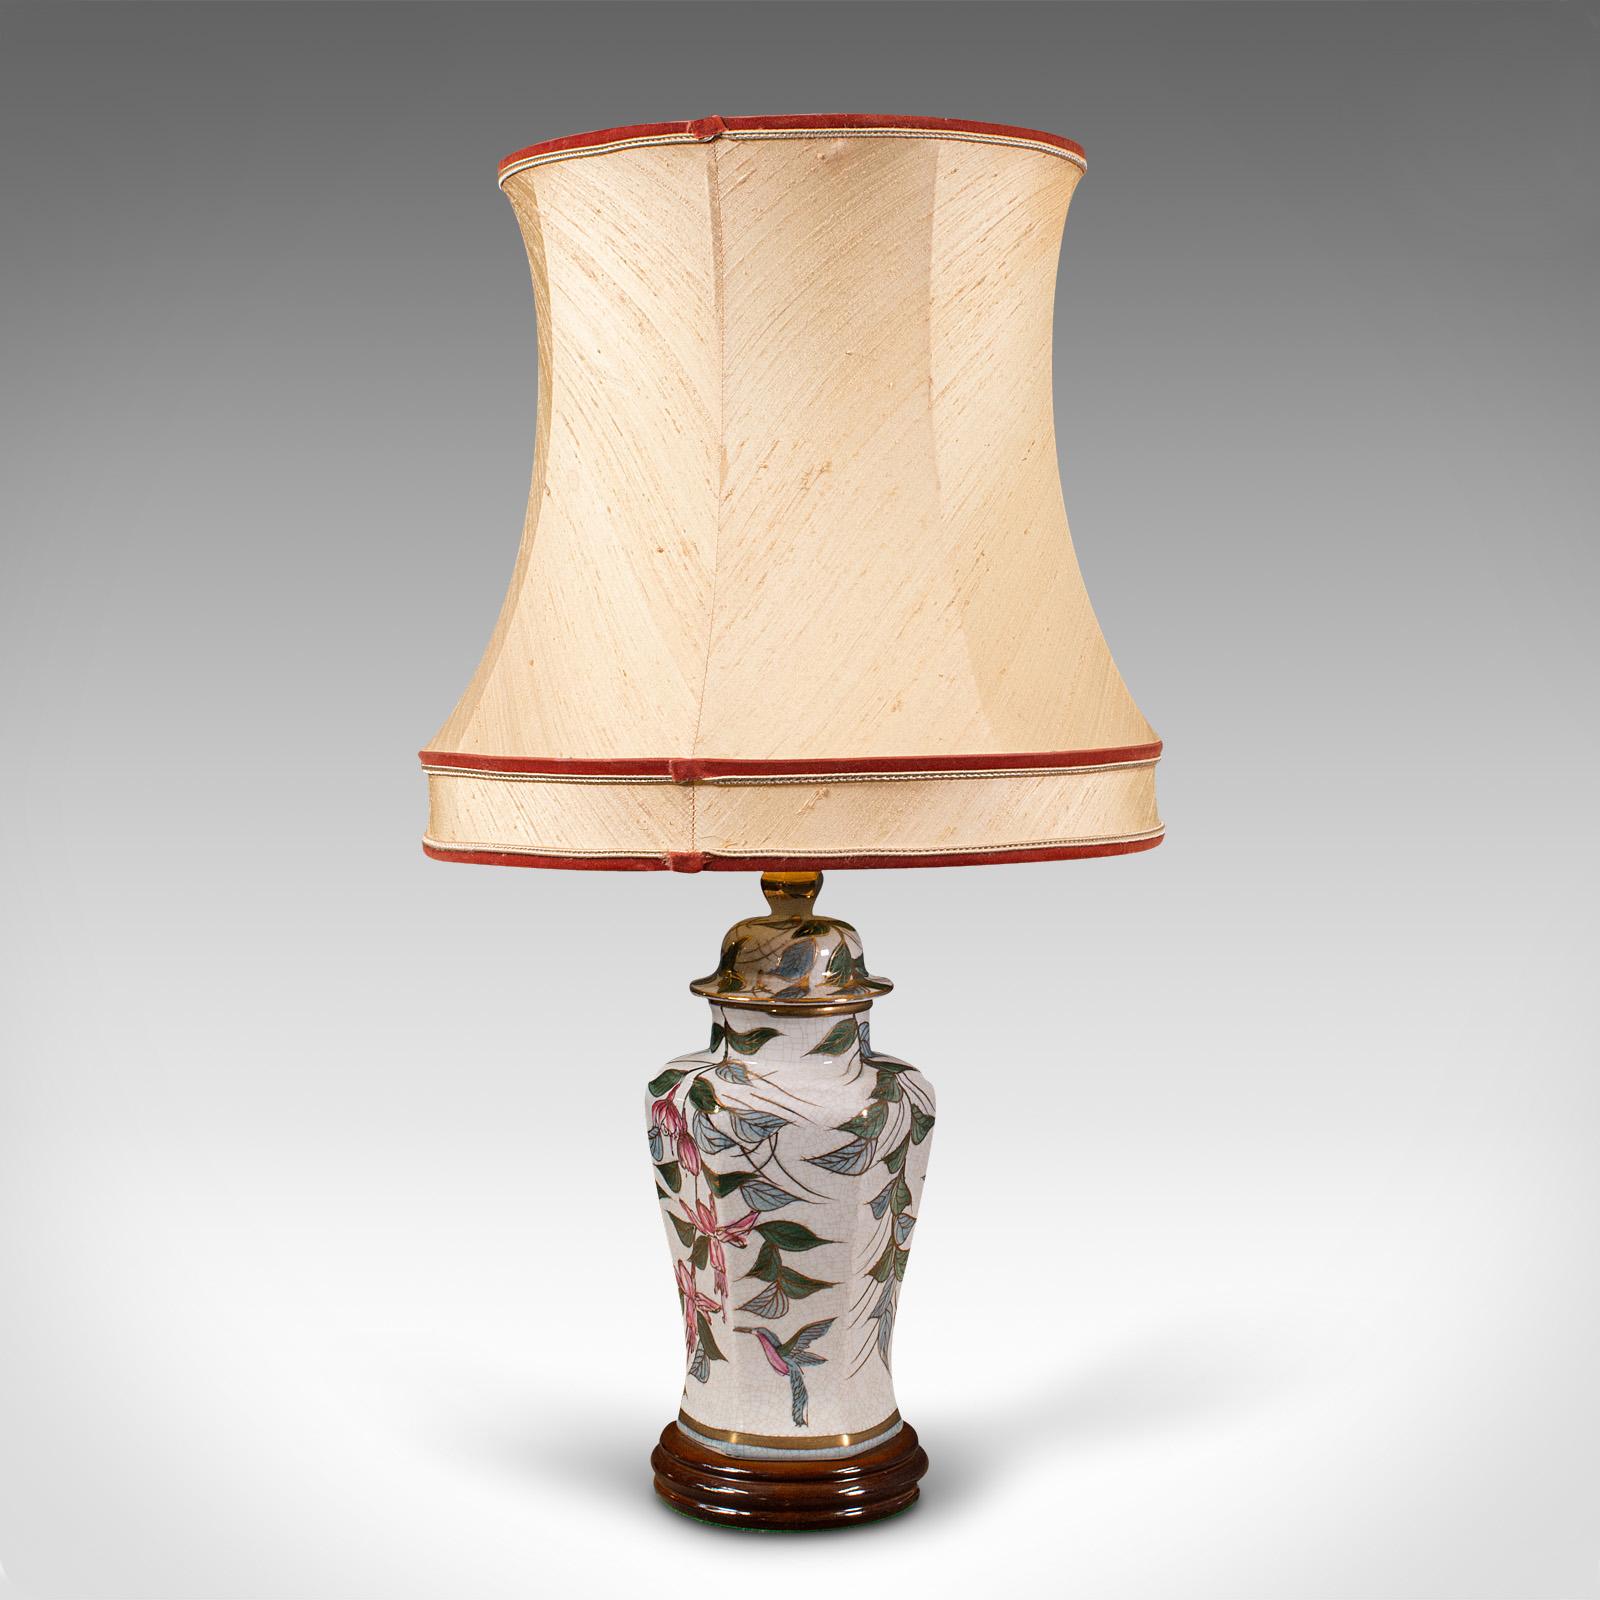 Vintage Table Lamp, Chinese, Ceramic, Decorative Light, Art Deco, Circa 1940 For Sale 2